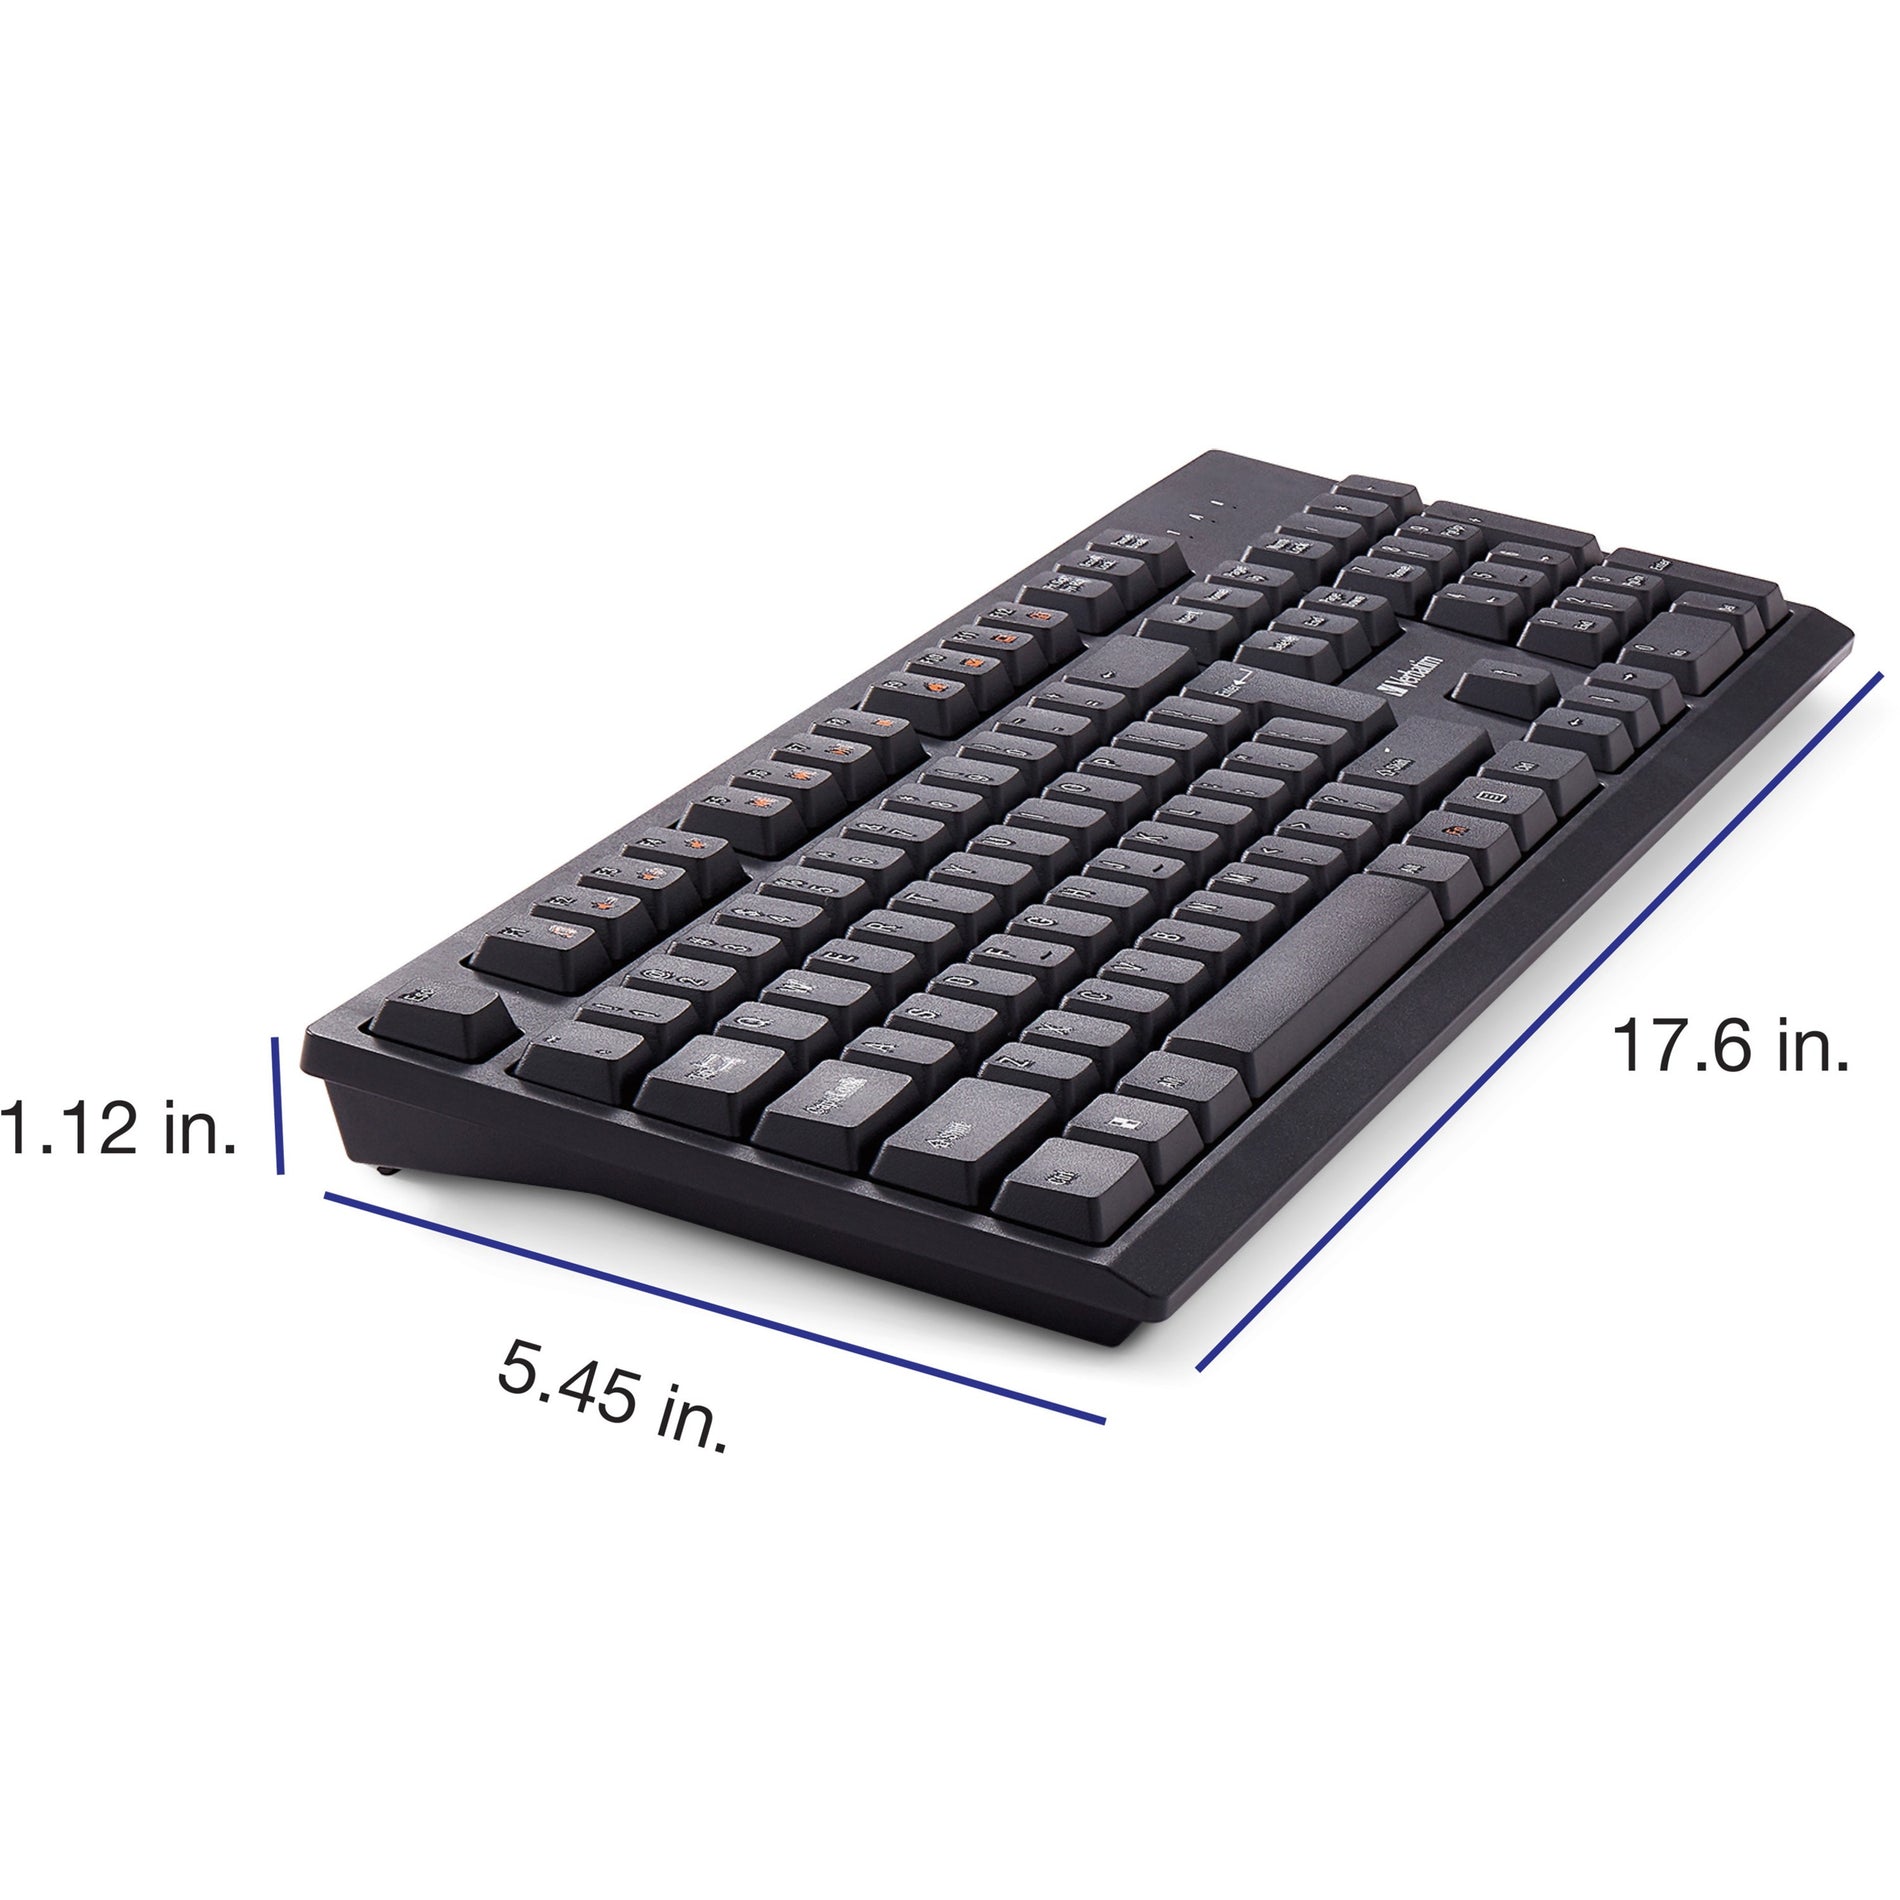 Verbatim 70724 Wireless Keyboard And Mouse, Bluetooth, Multimedia Hot Keys